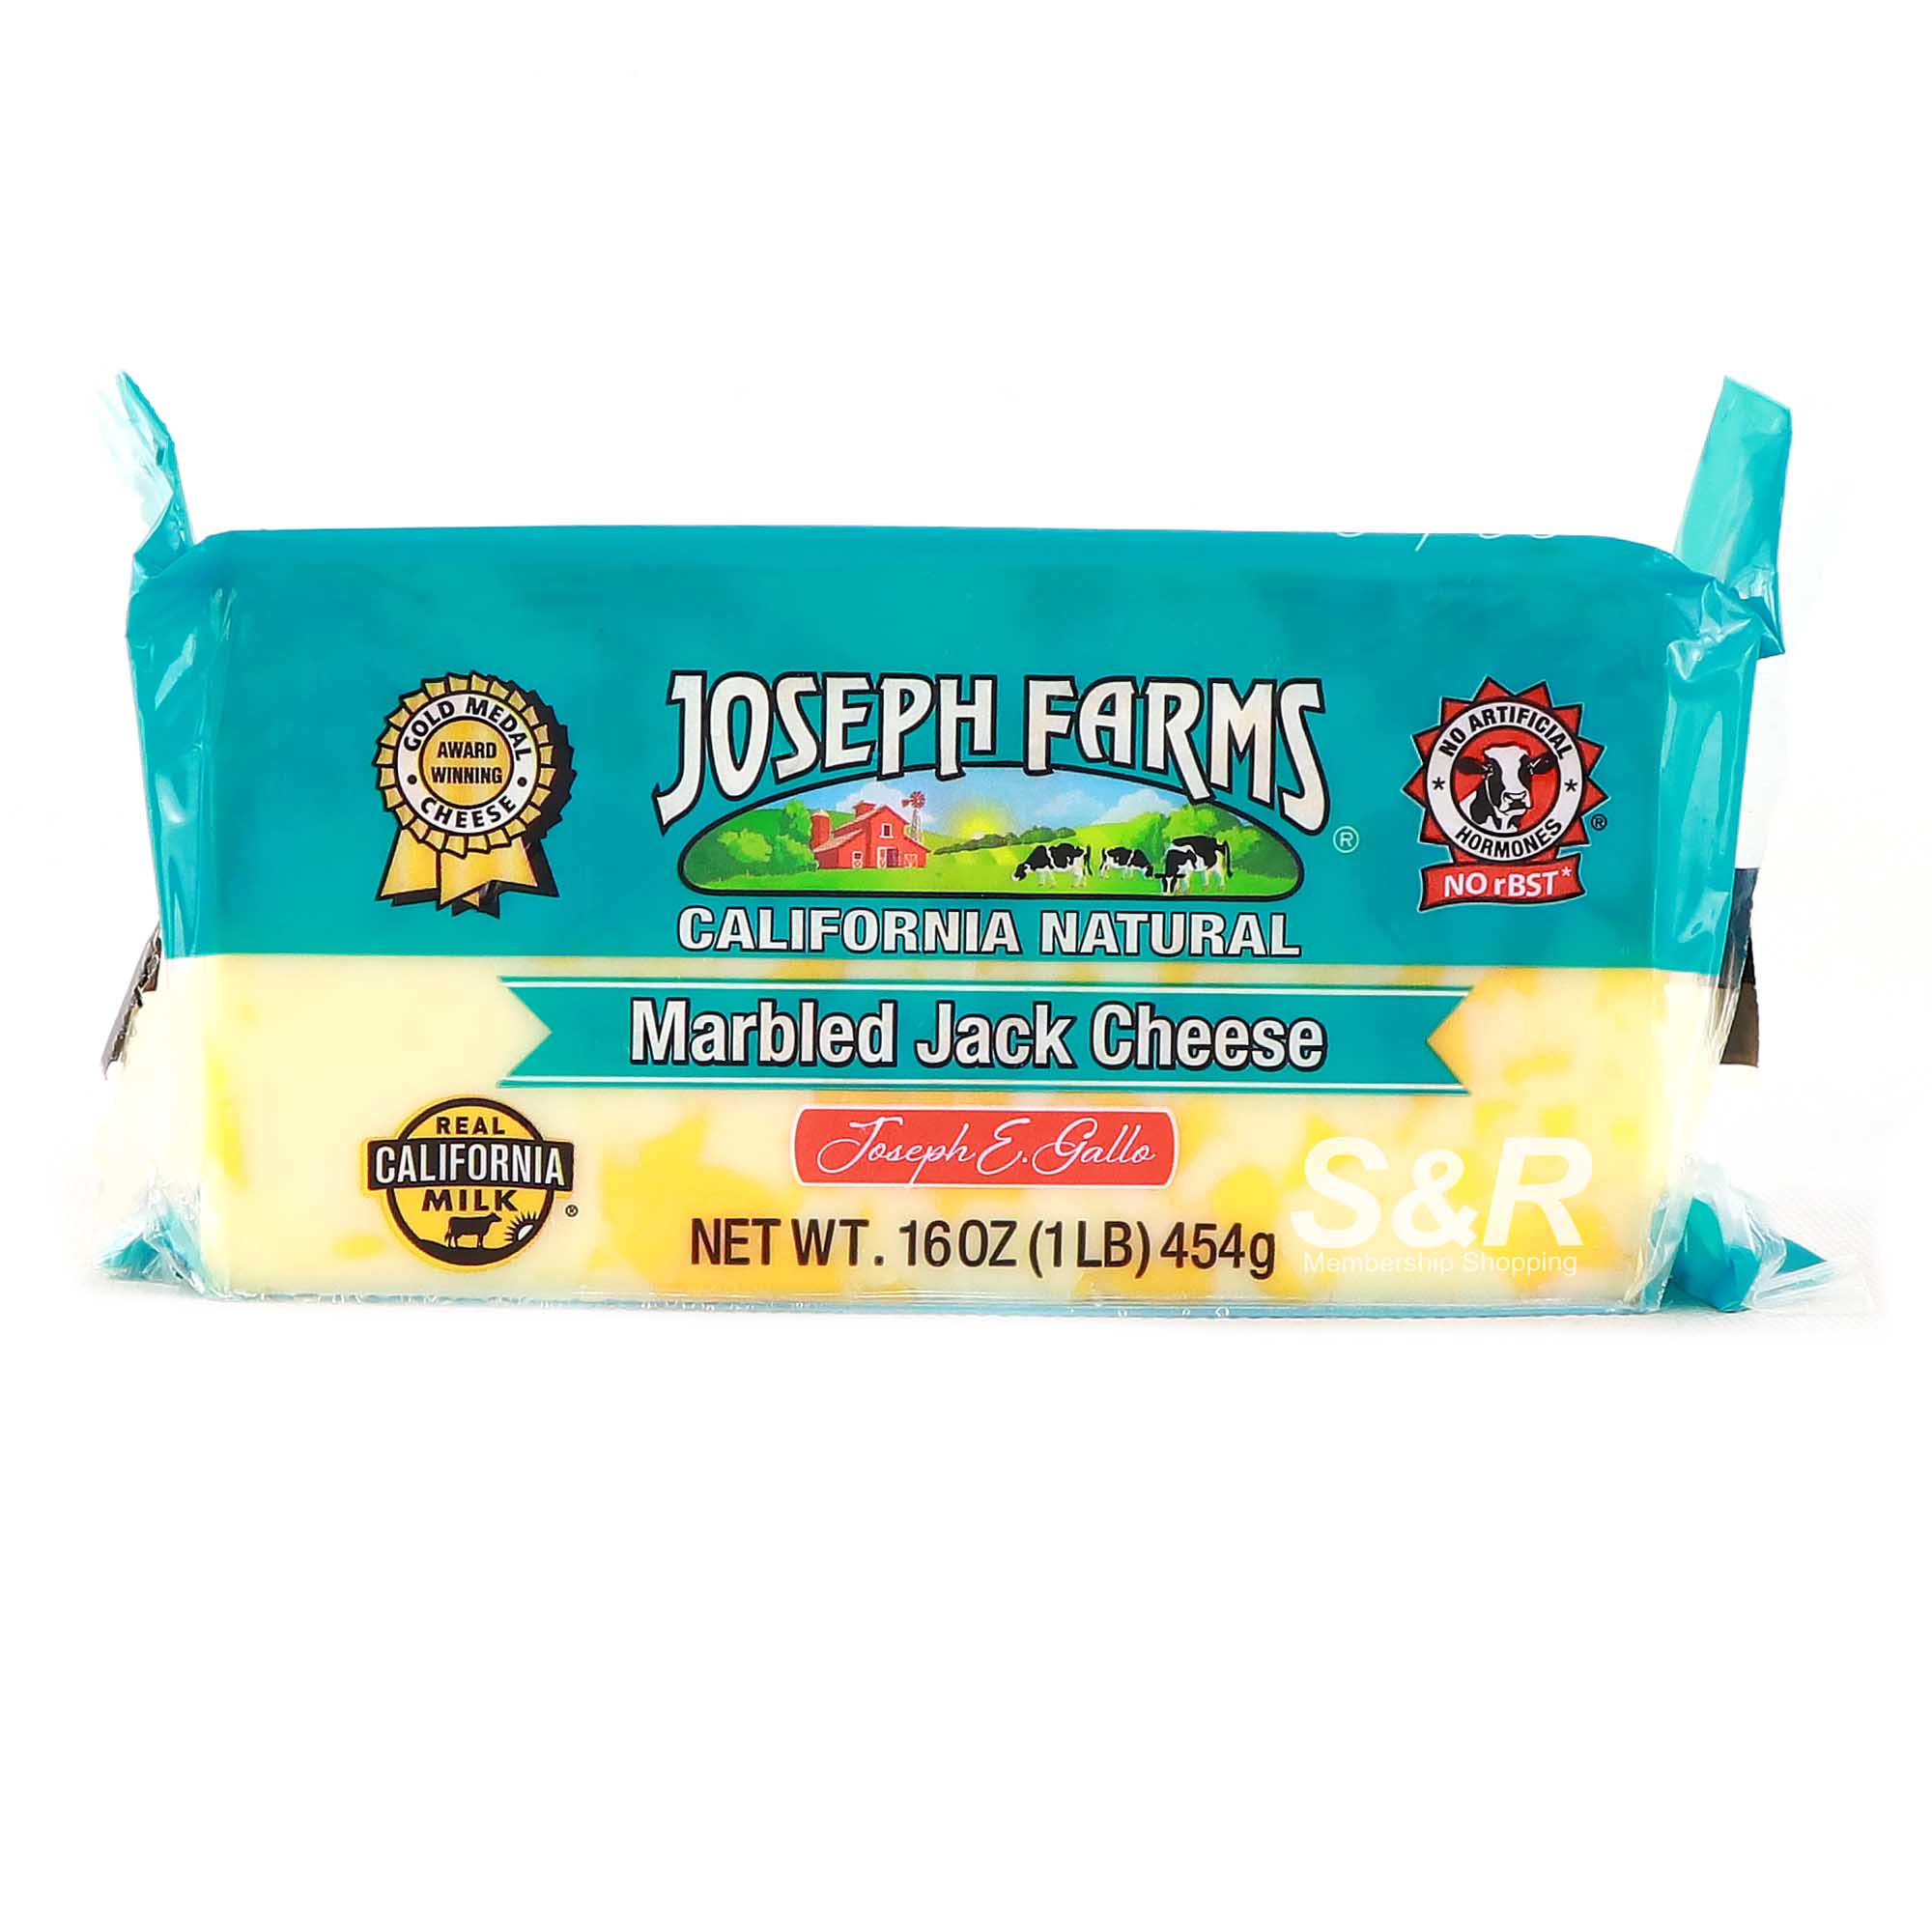 Joseph Farms California Natural Marbled Jack Cheese 454g